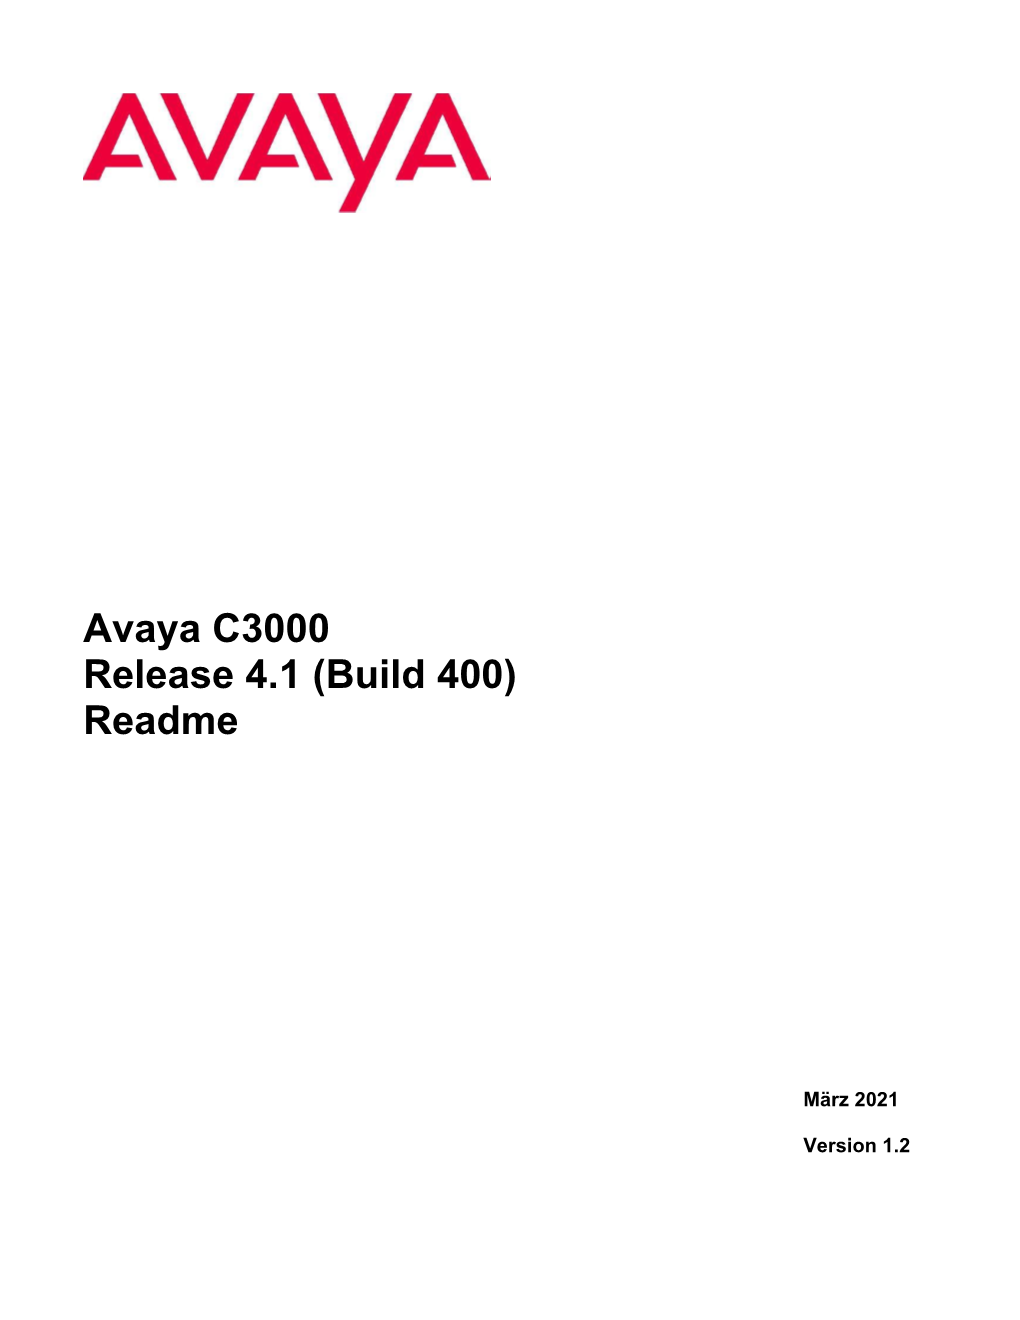 Avaya C3000 Release 4.1 (Build 400) Readme